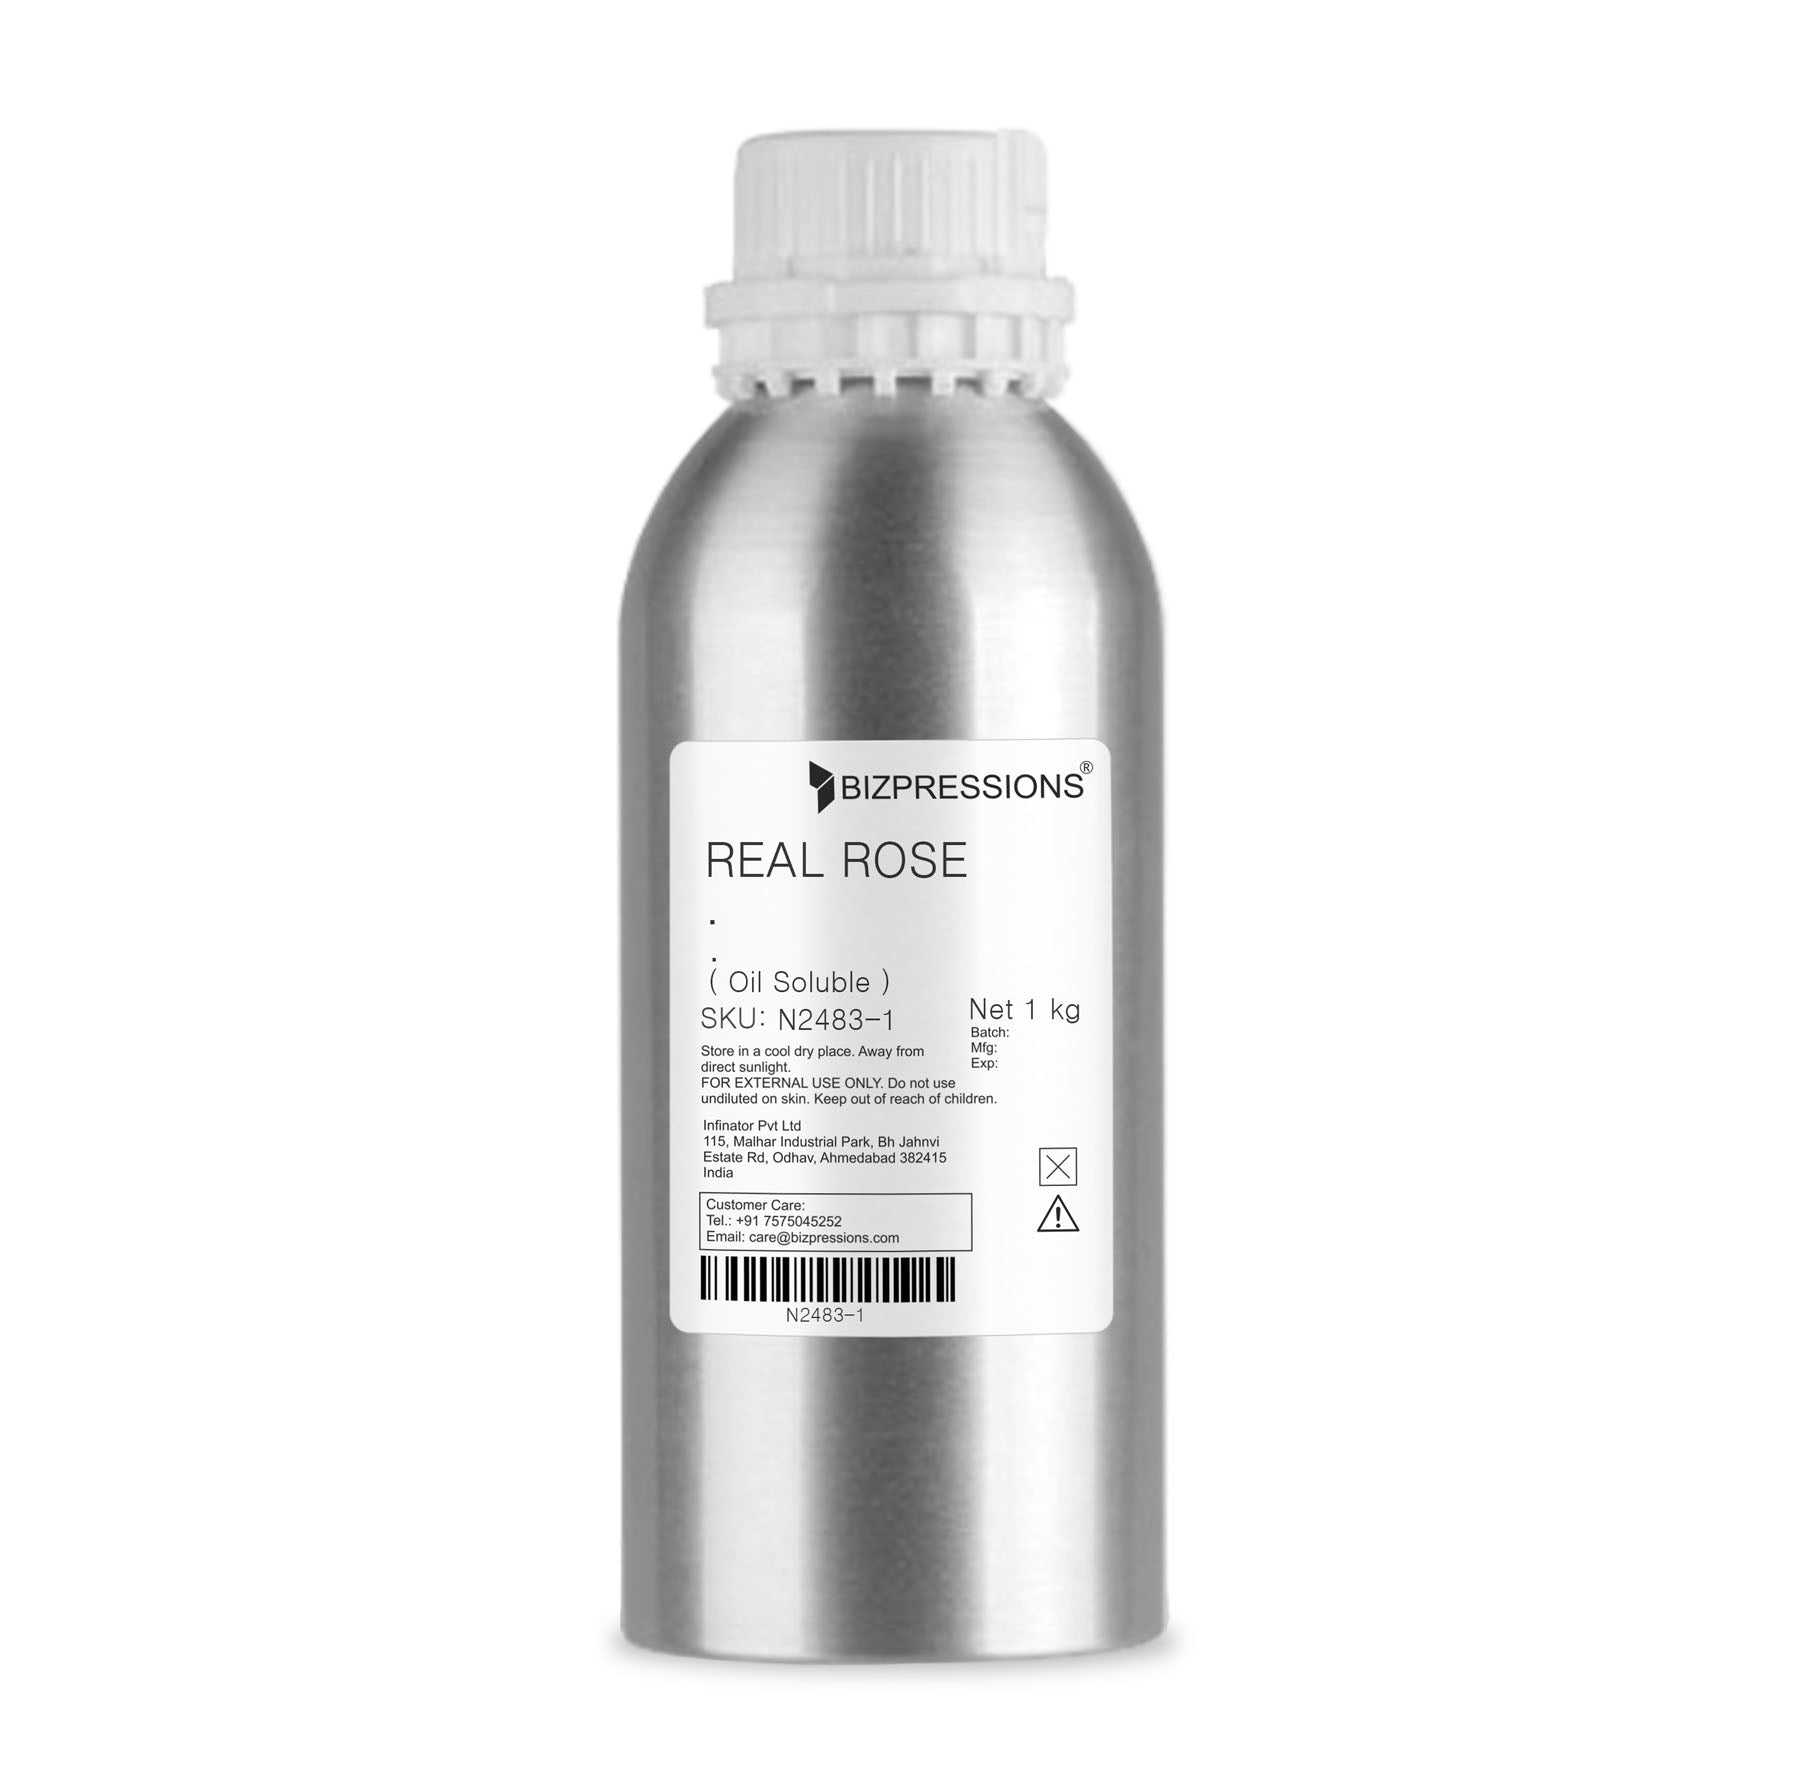 REAL ROSE - Fragrance ( Oil Soluble ) - 1 kg